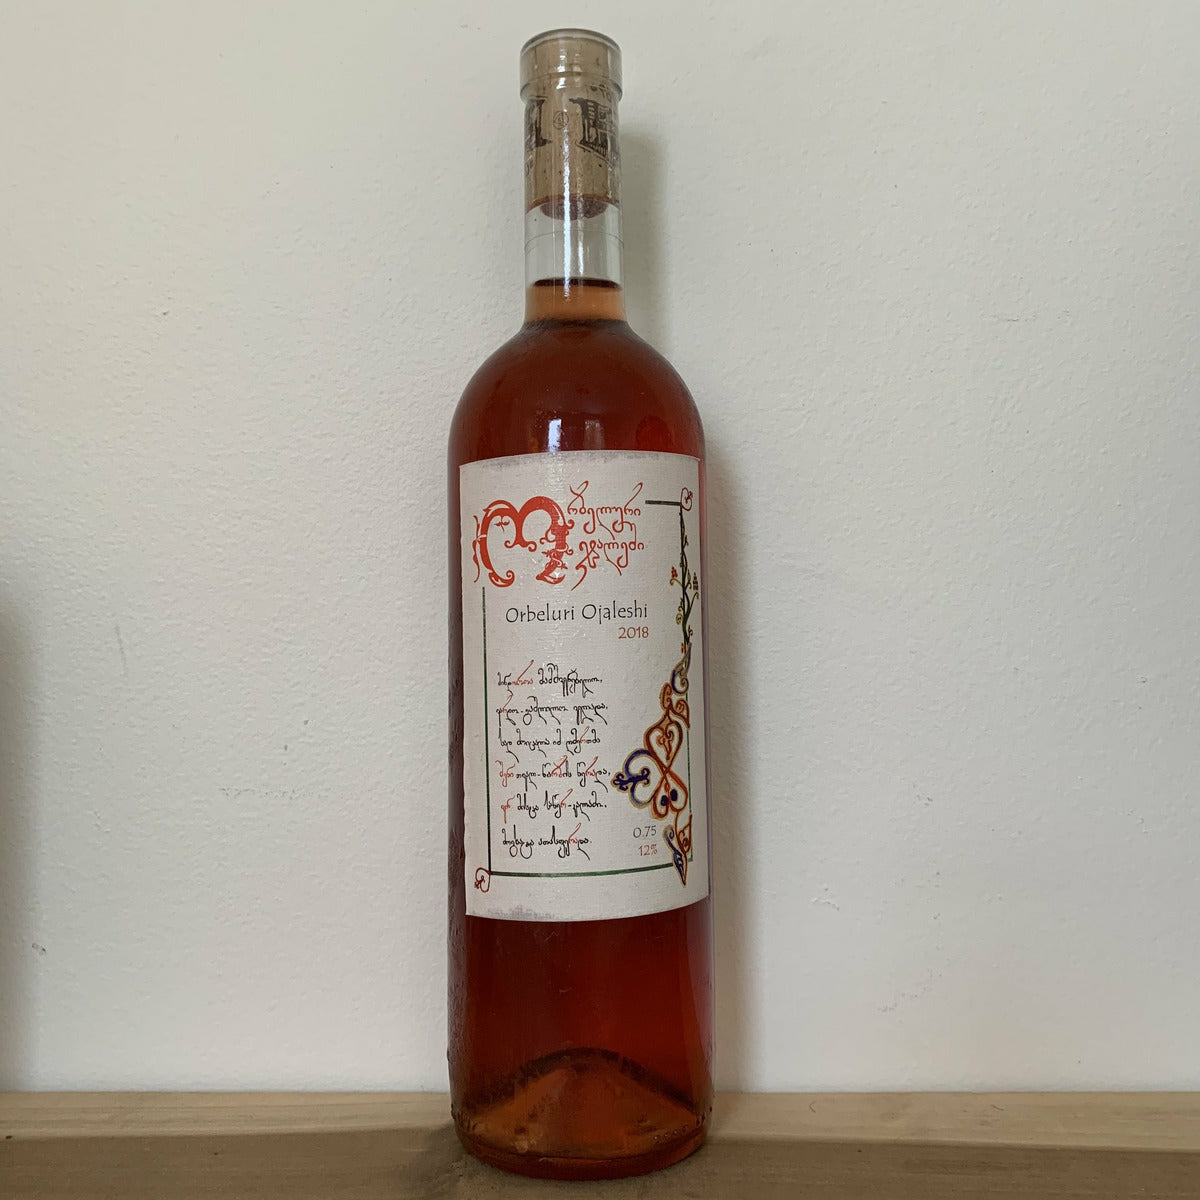 Oda Winery, "Orbeluri Ojaleshi" Rosé 2018